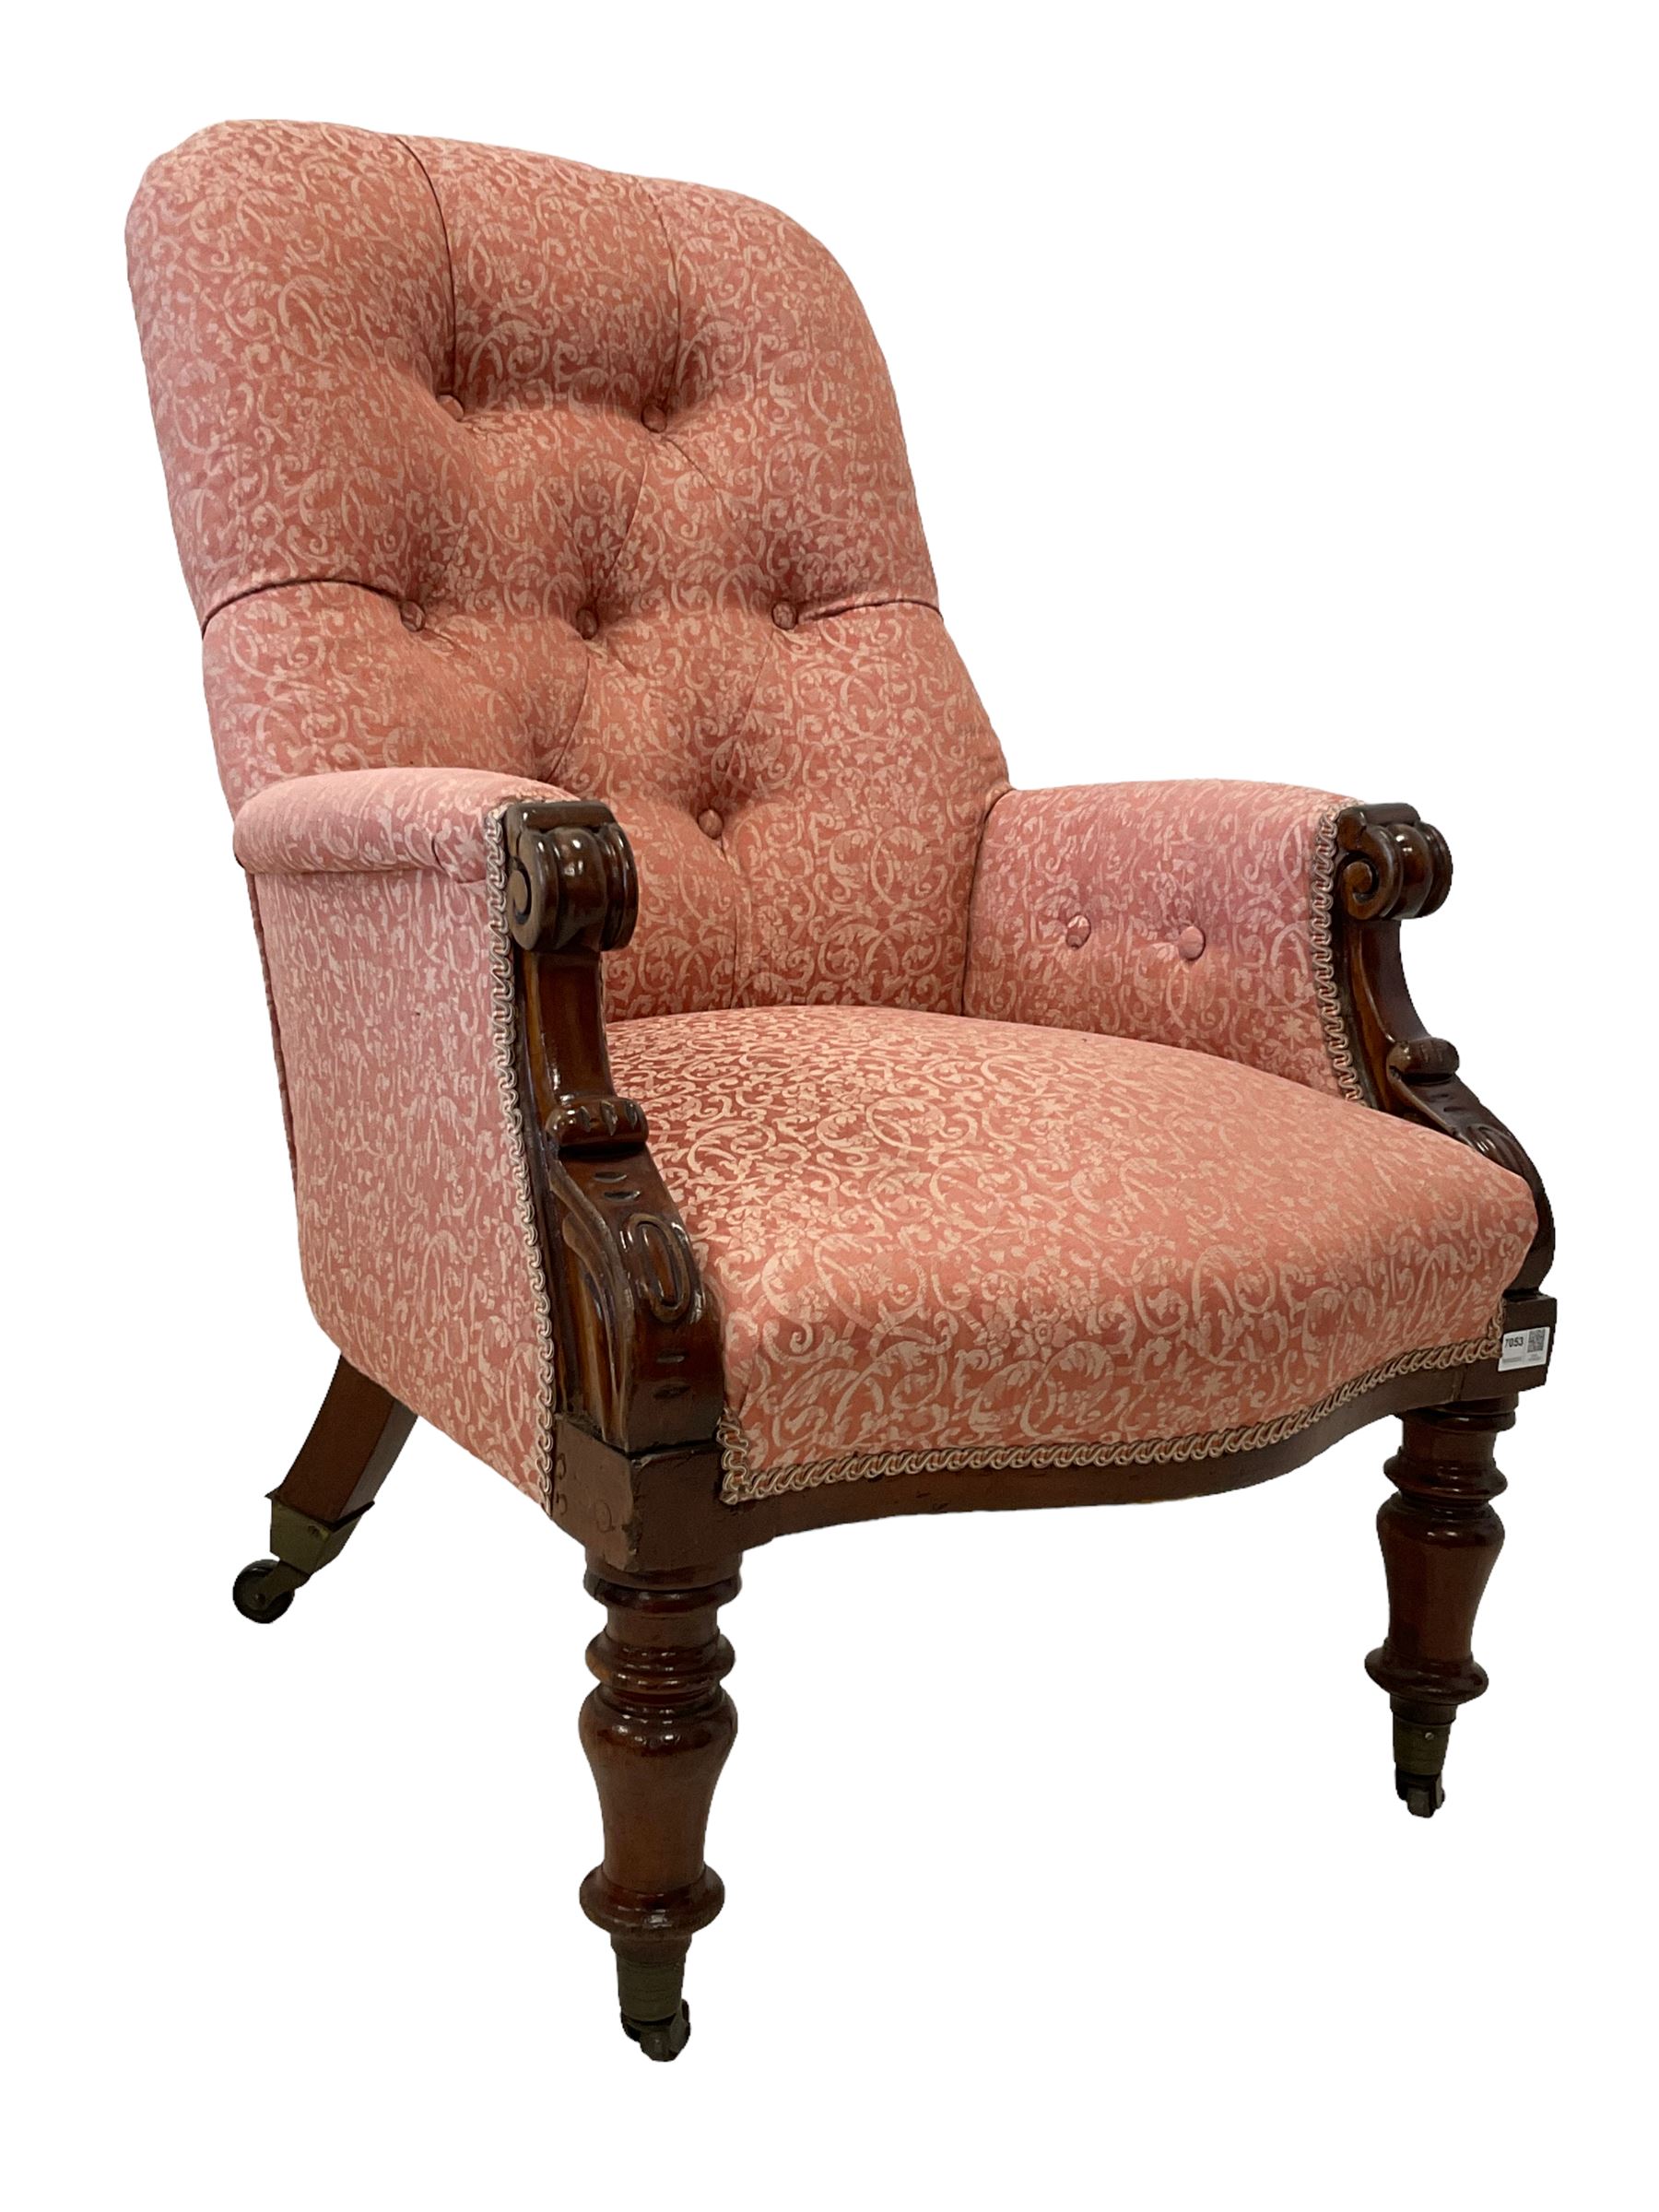 19th century mahogany armchair - Image 5 of 6